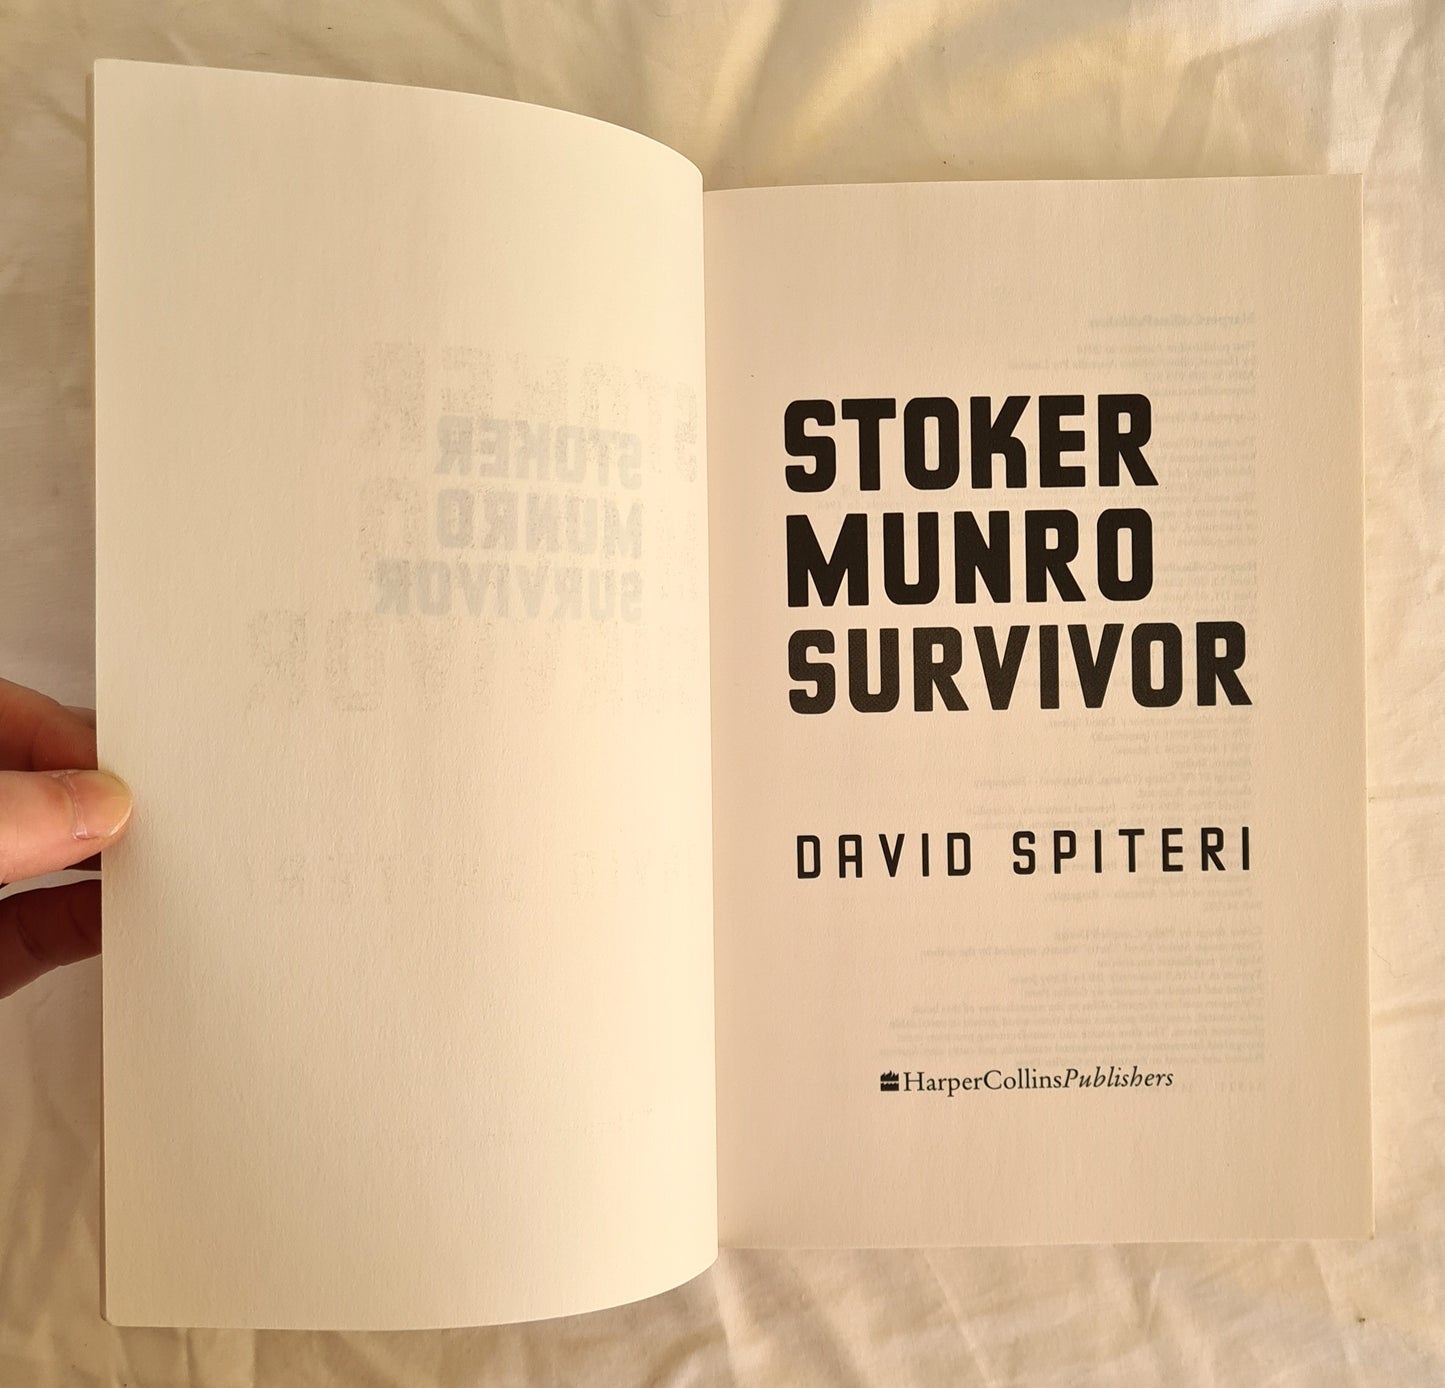 Stoker Munro Survivor by David Spiteri